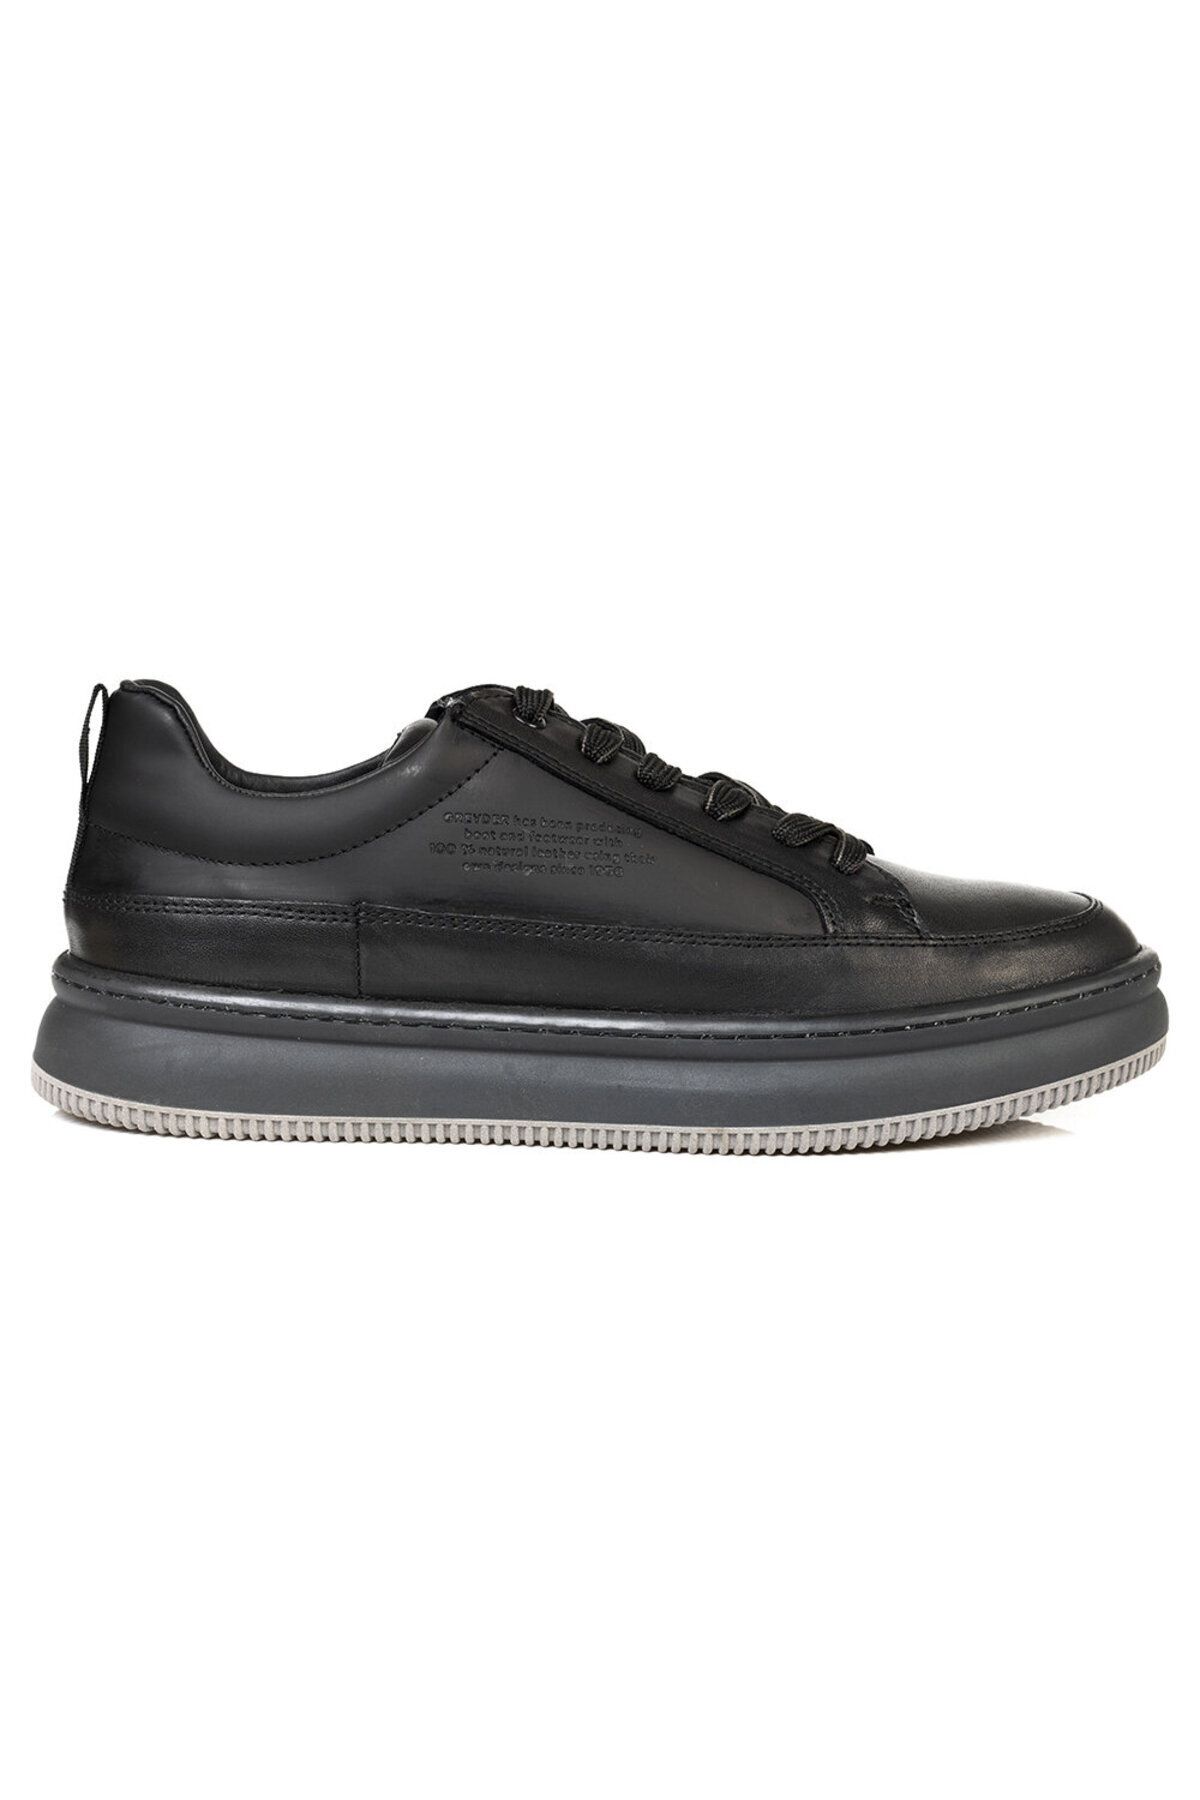 Greyder Erkek Siyah Hakiki Deri Sneaker Ayakkabı 3k1ua16380